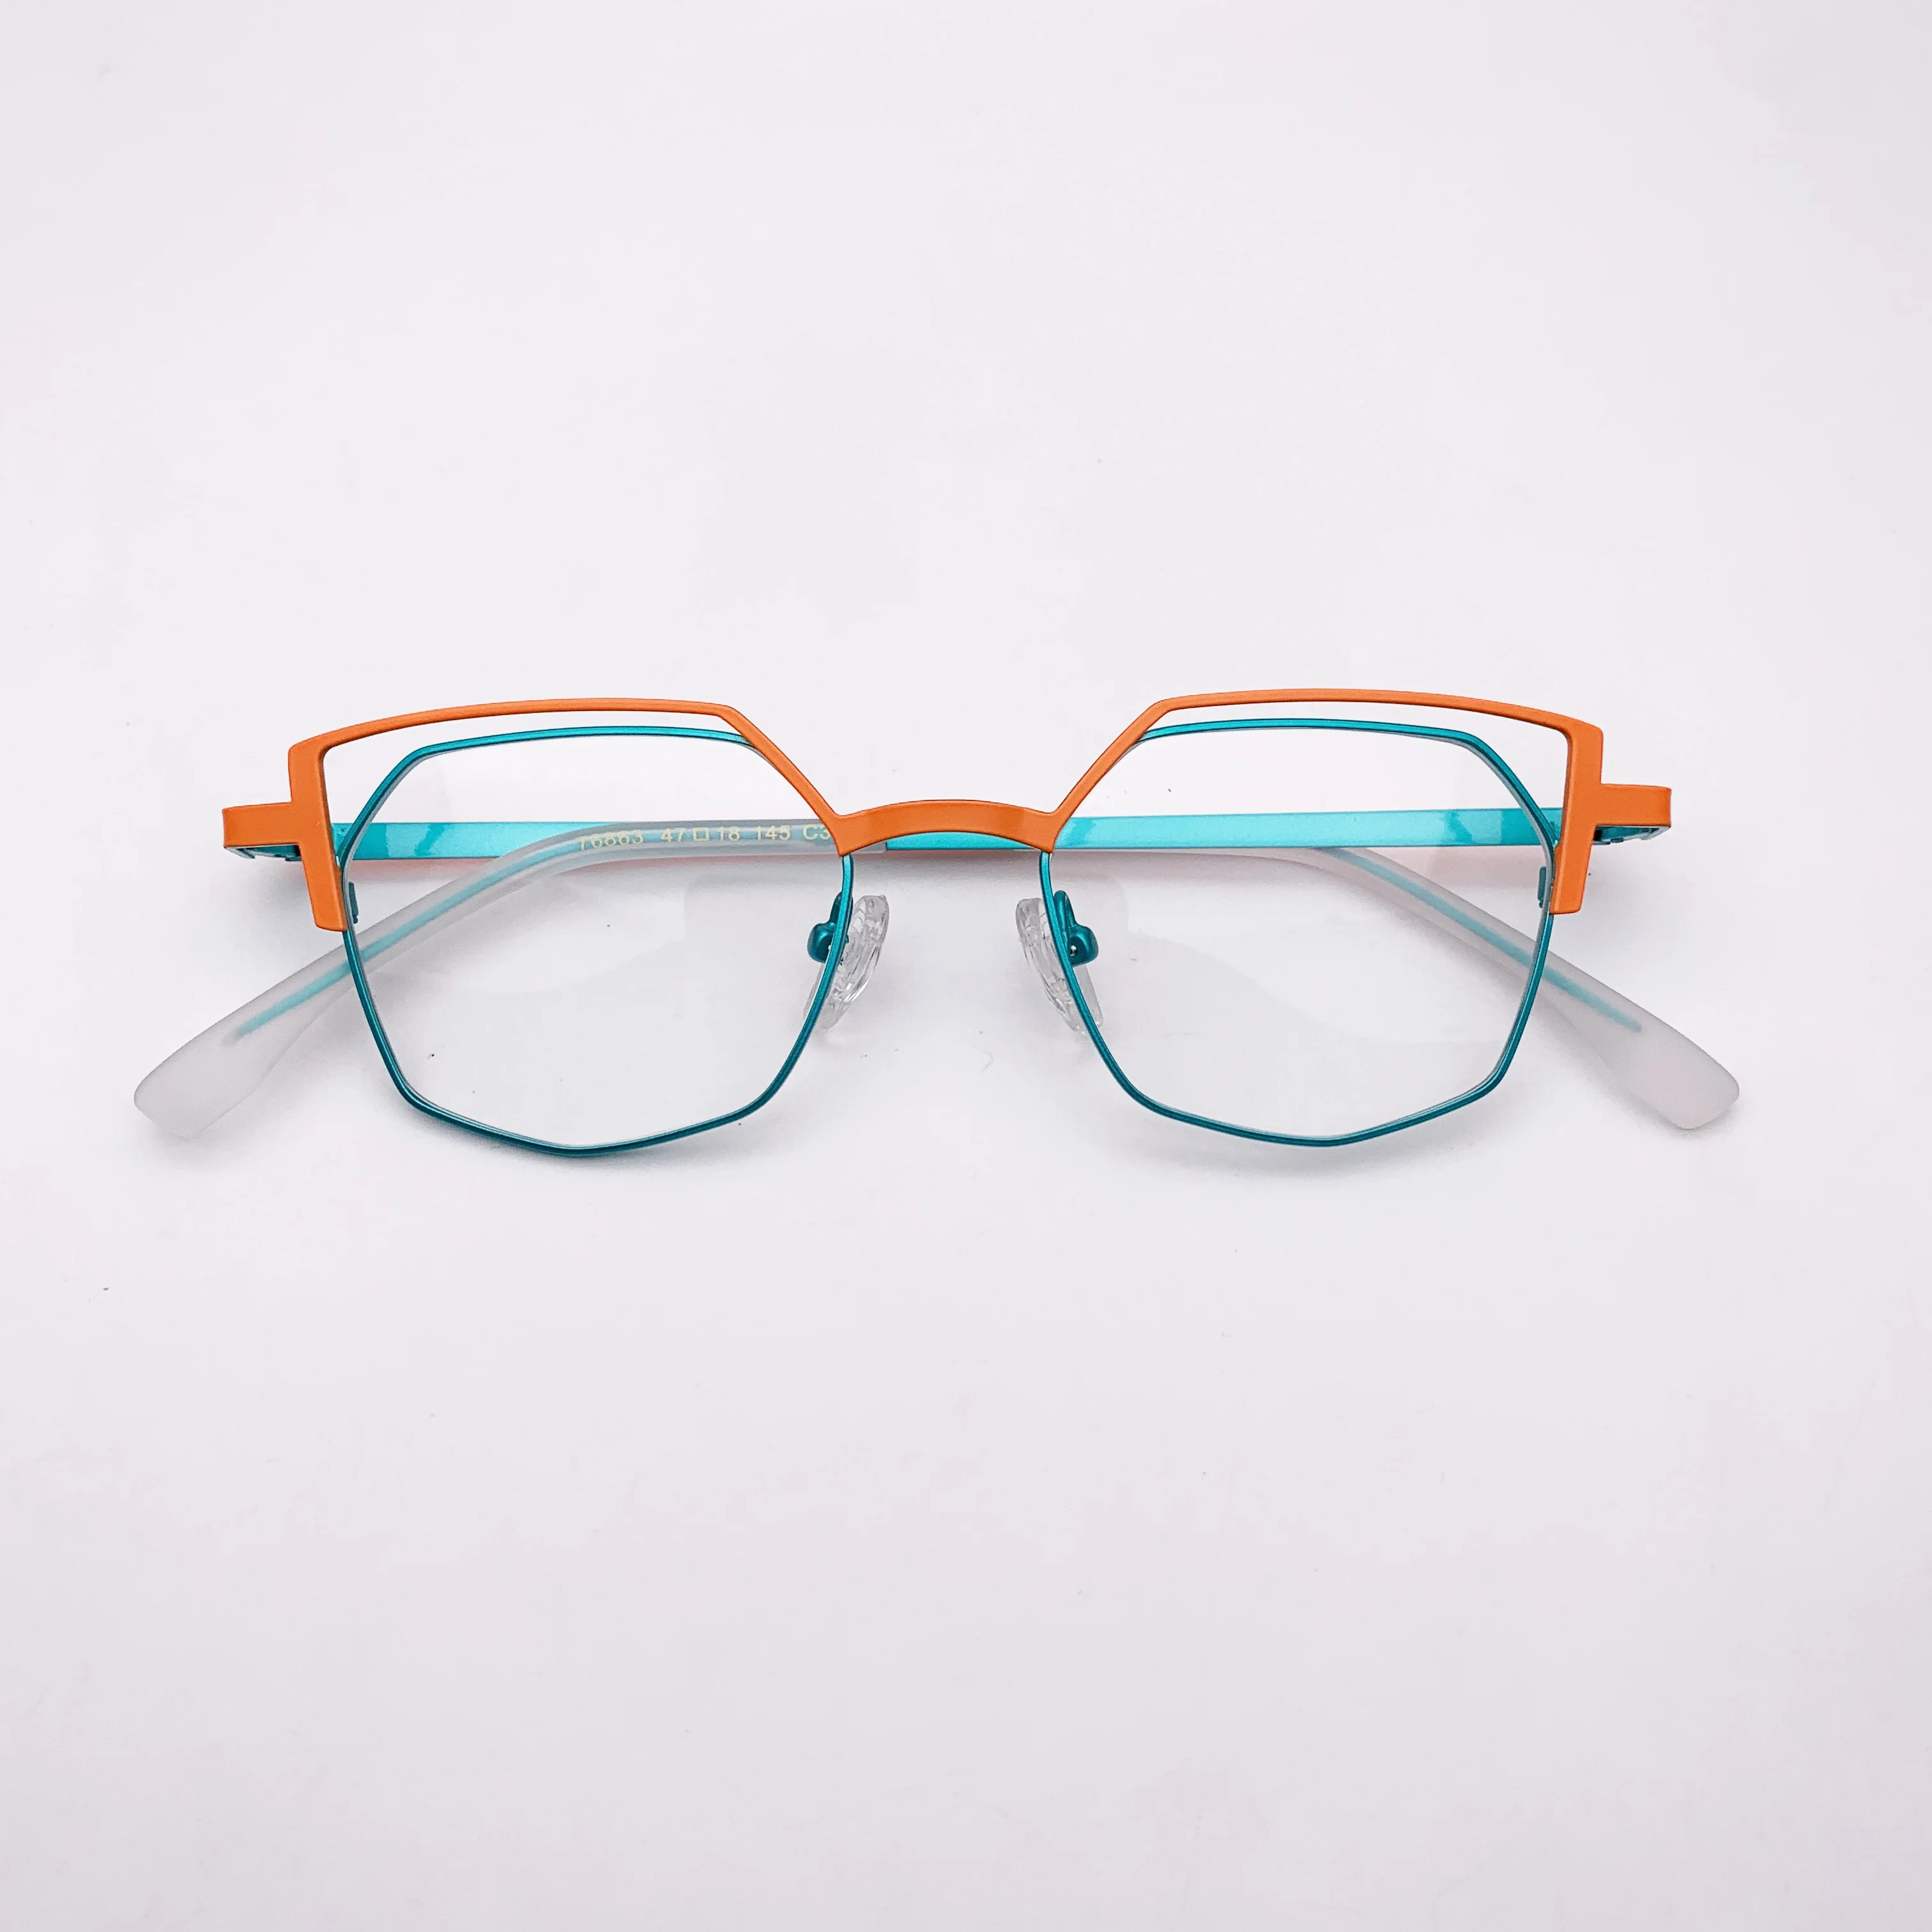 Belight Optical Pure Titanium Combine Color Full Rim Vintage Retro Glasses Prescription Lens Eyeglasses Frame Eyewear 76863